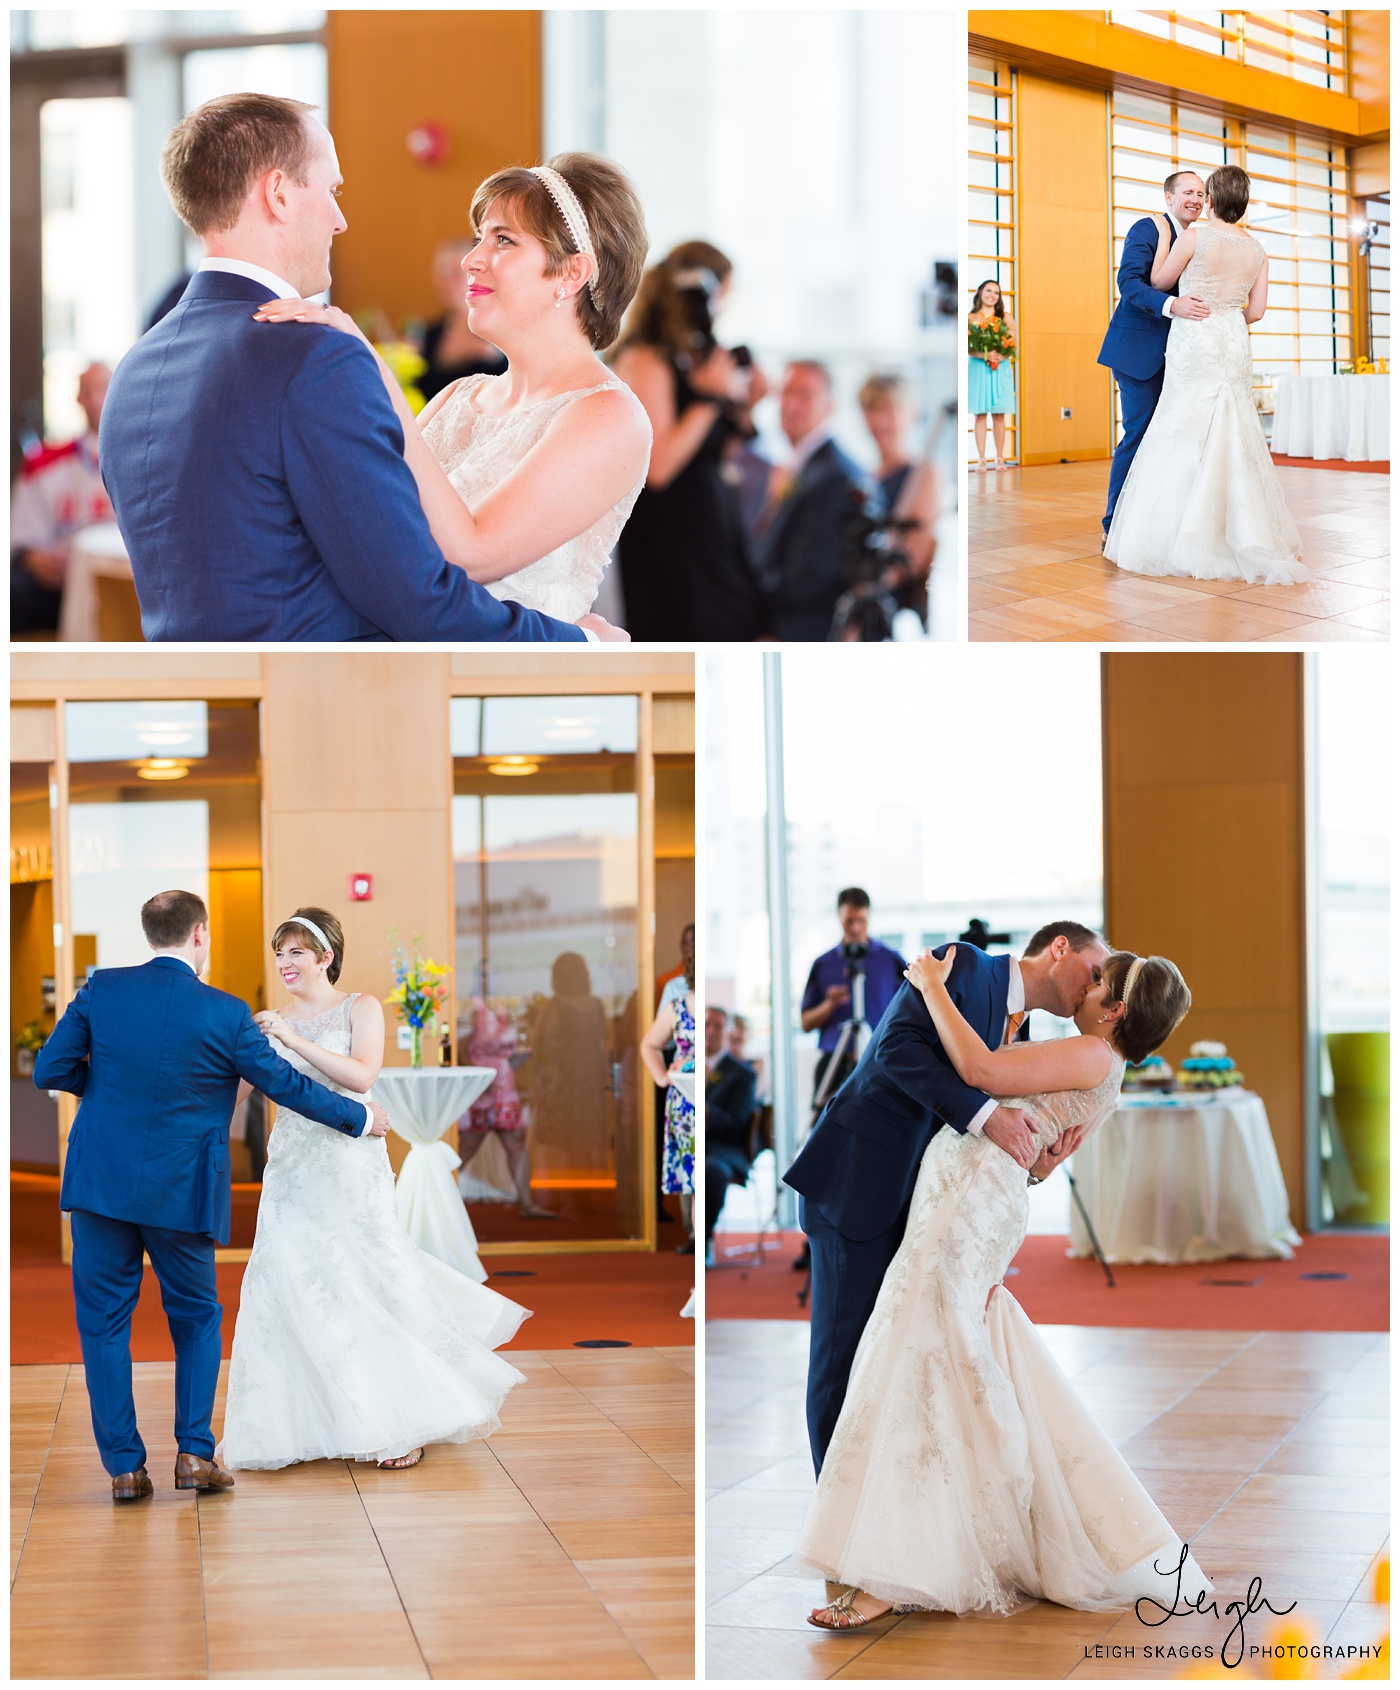 Andi & David | Slover Library Wedding